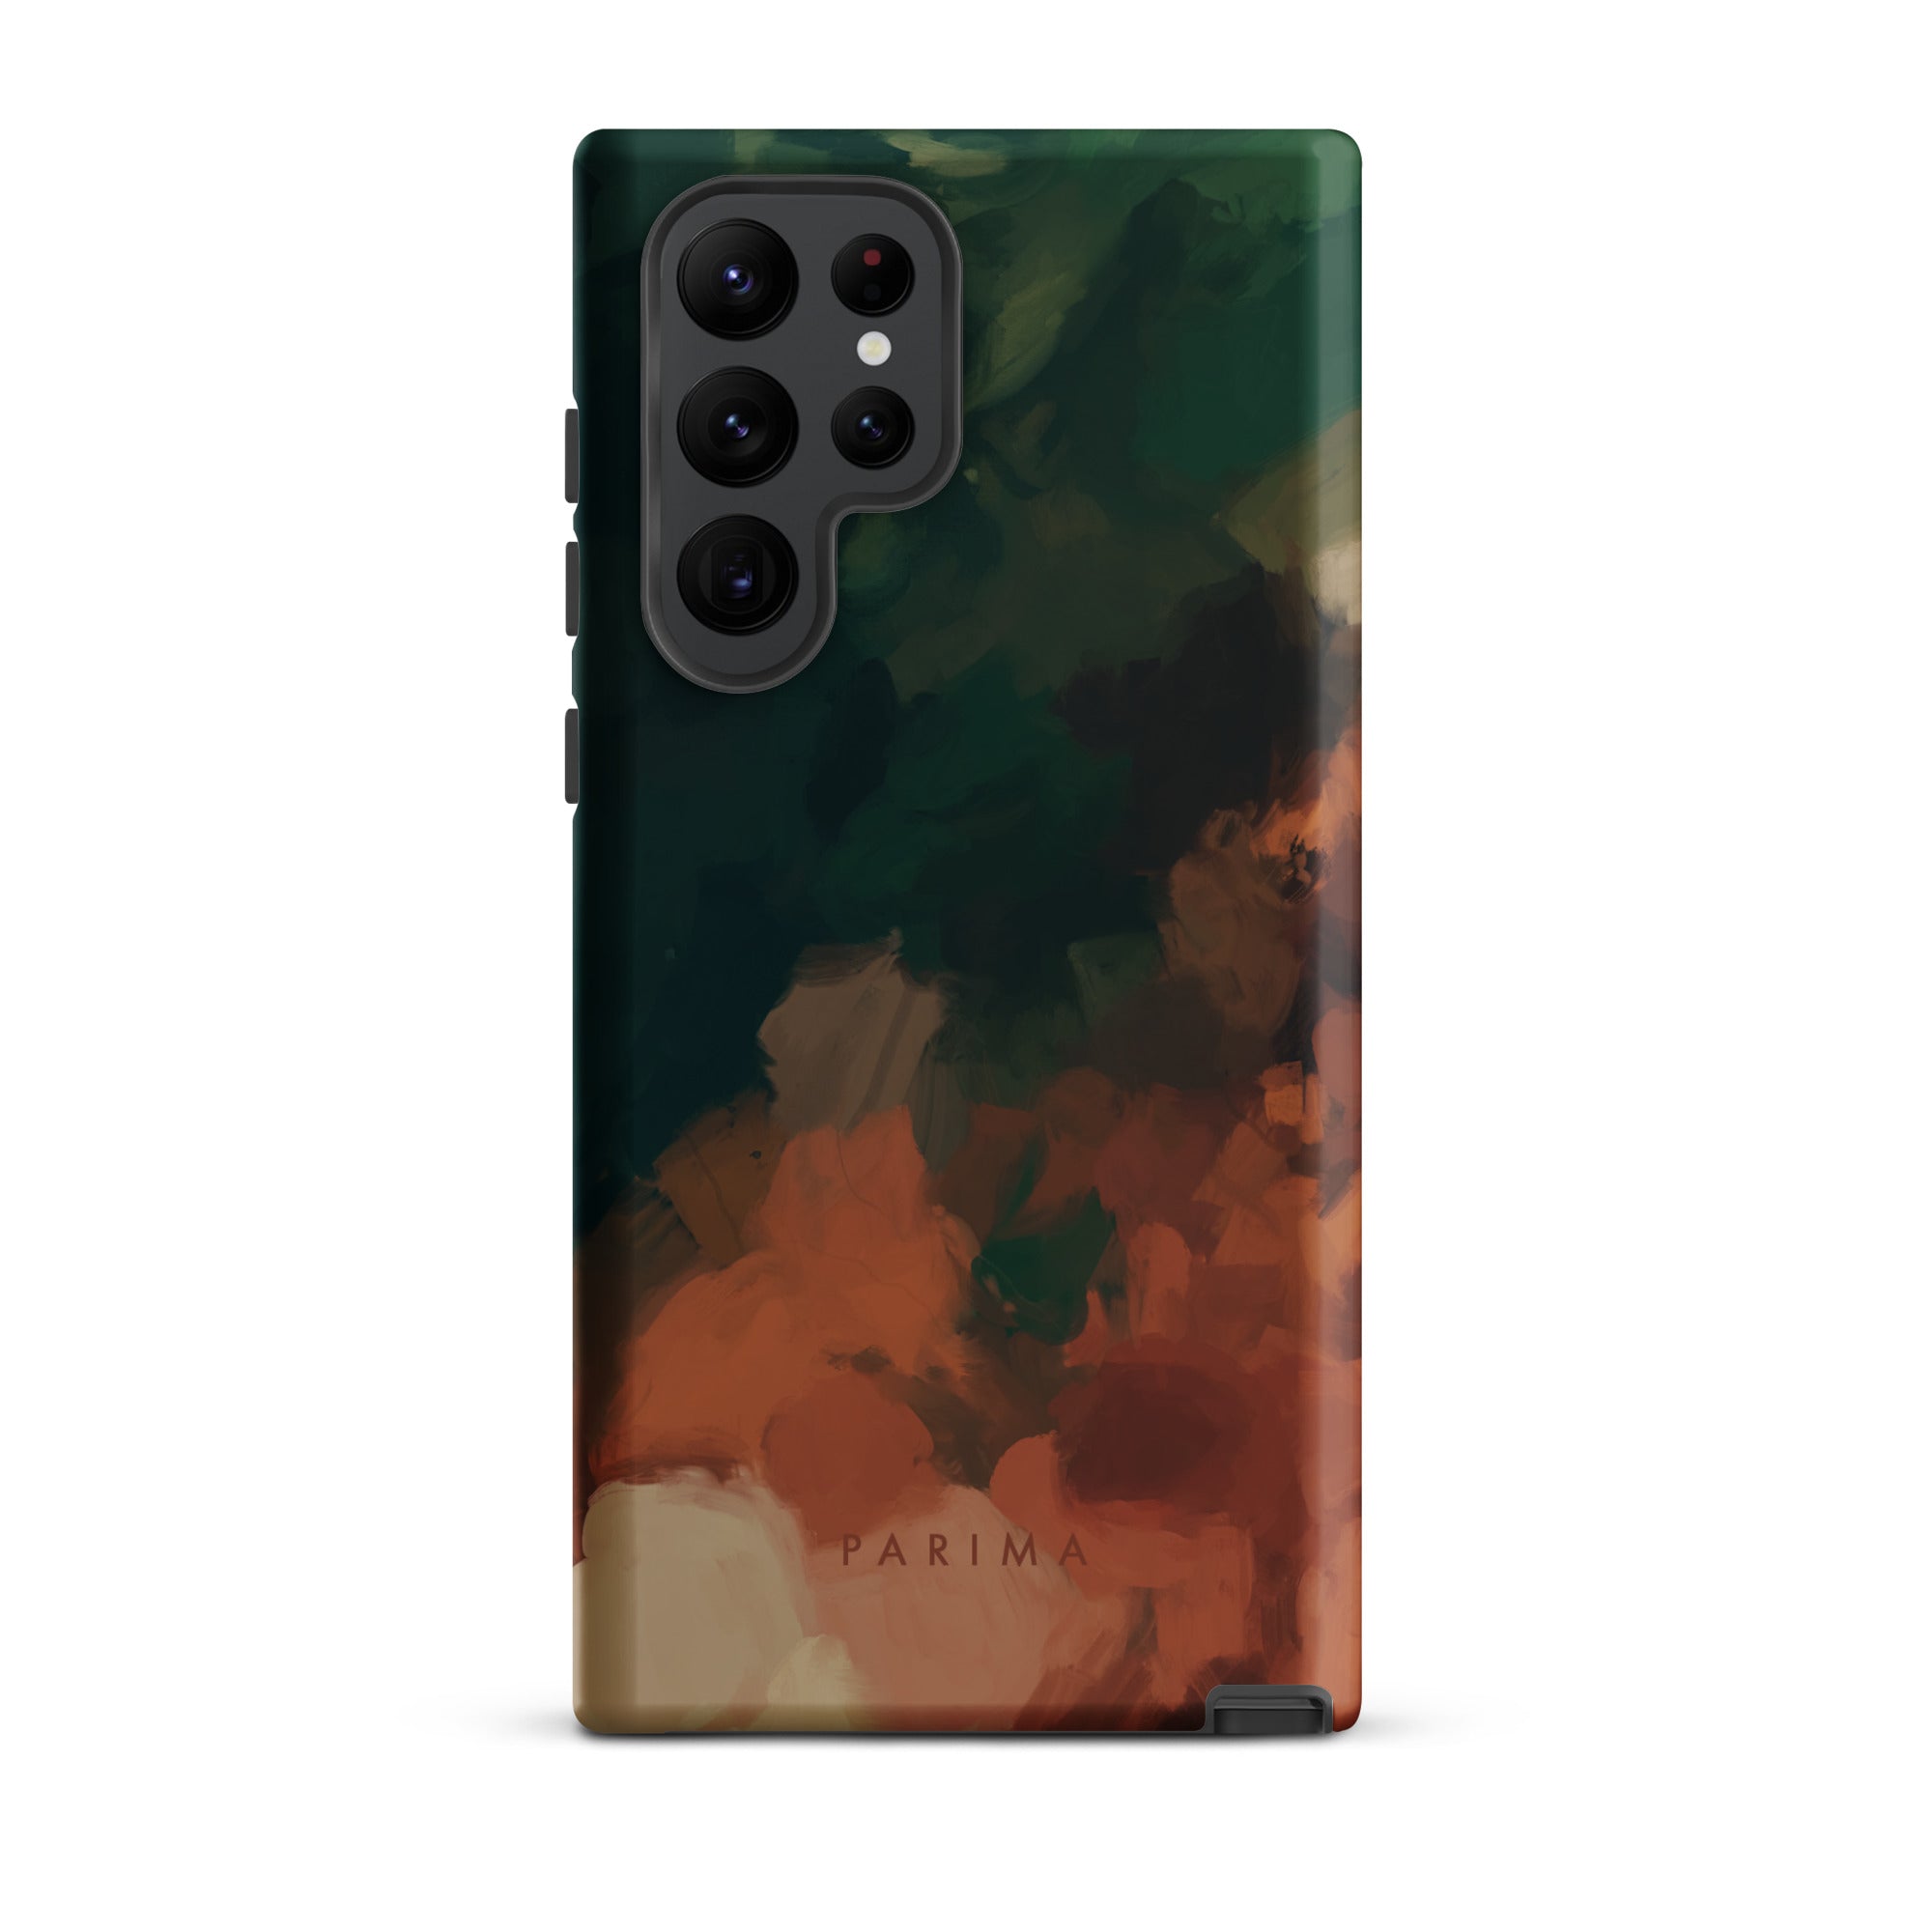 Cedar, green and brown abstract art on Samsung Galaxy S22 Ultra tough case by Parima Studio